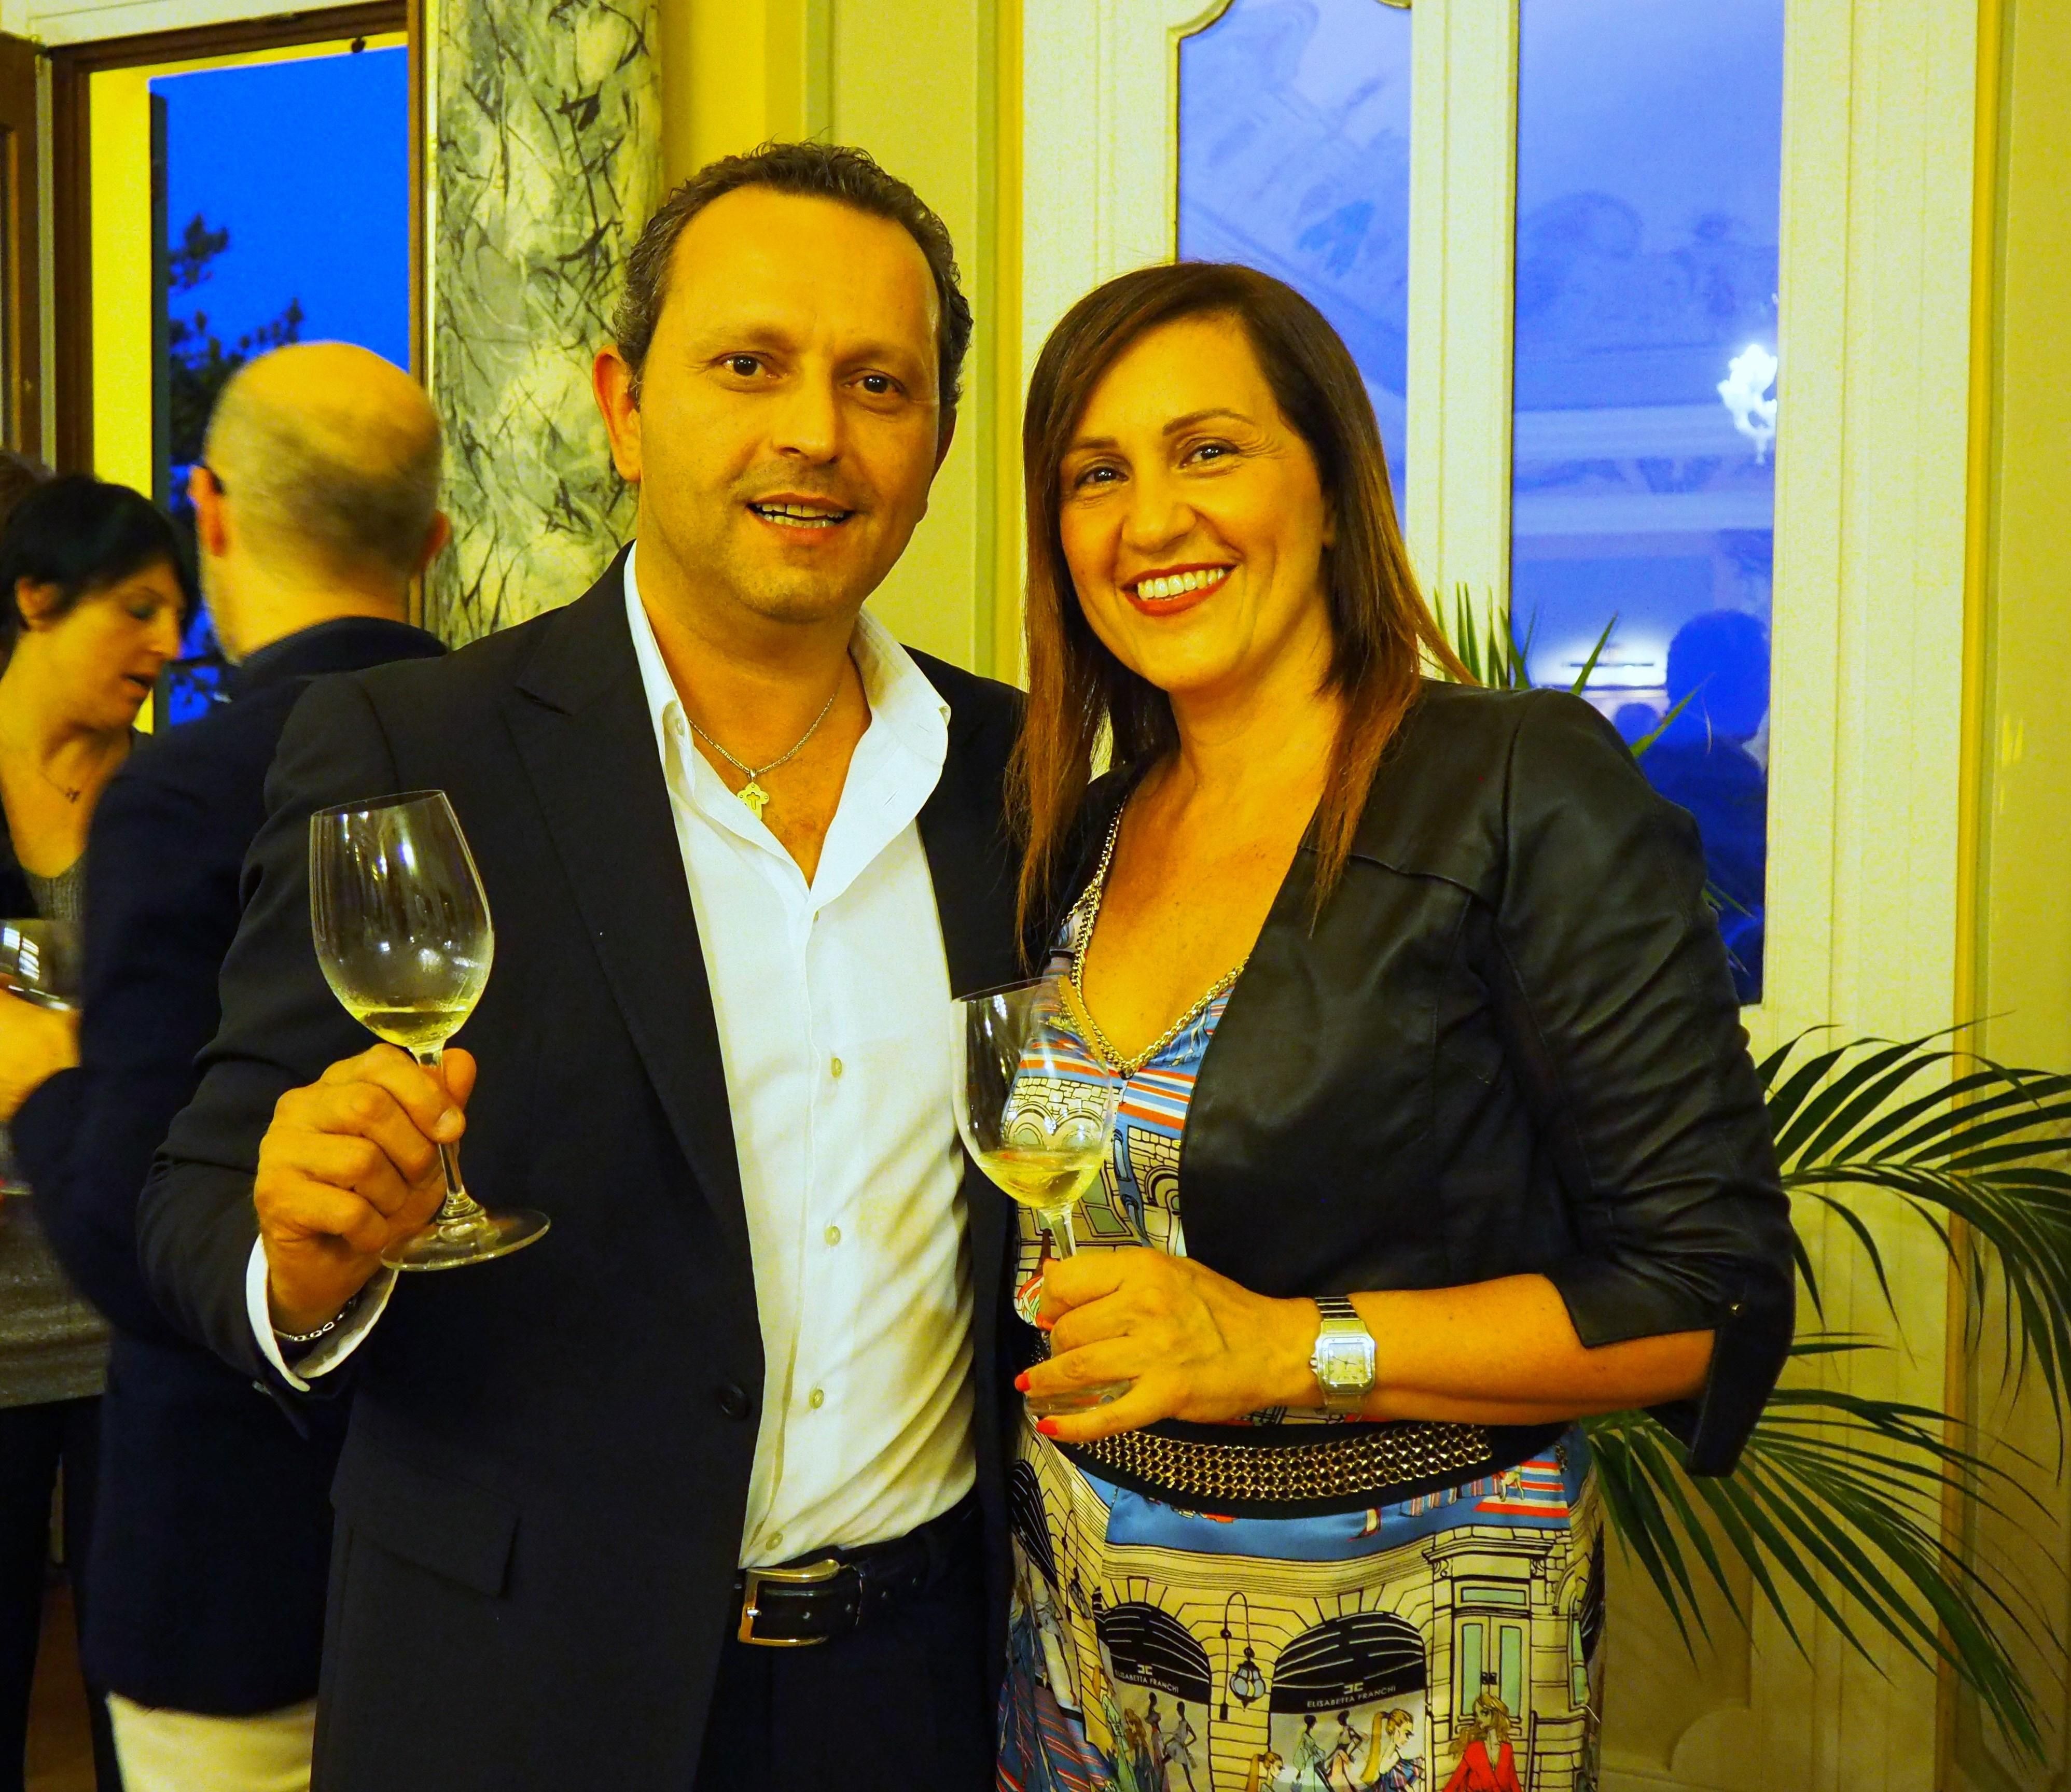 Stefania and Francesco Porcarelli, owners